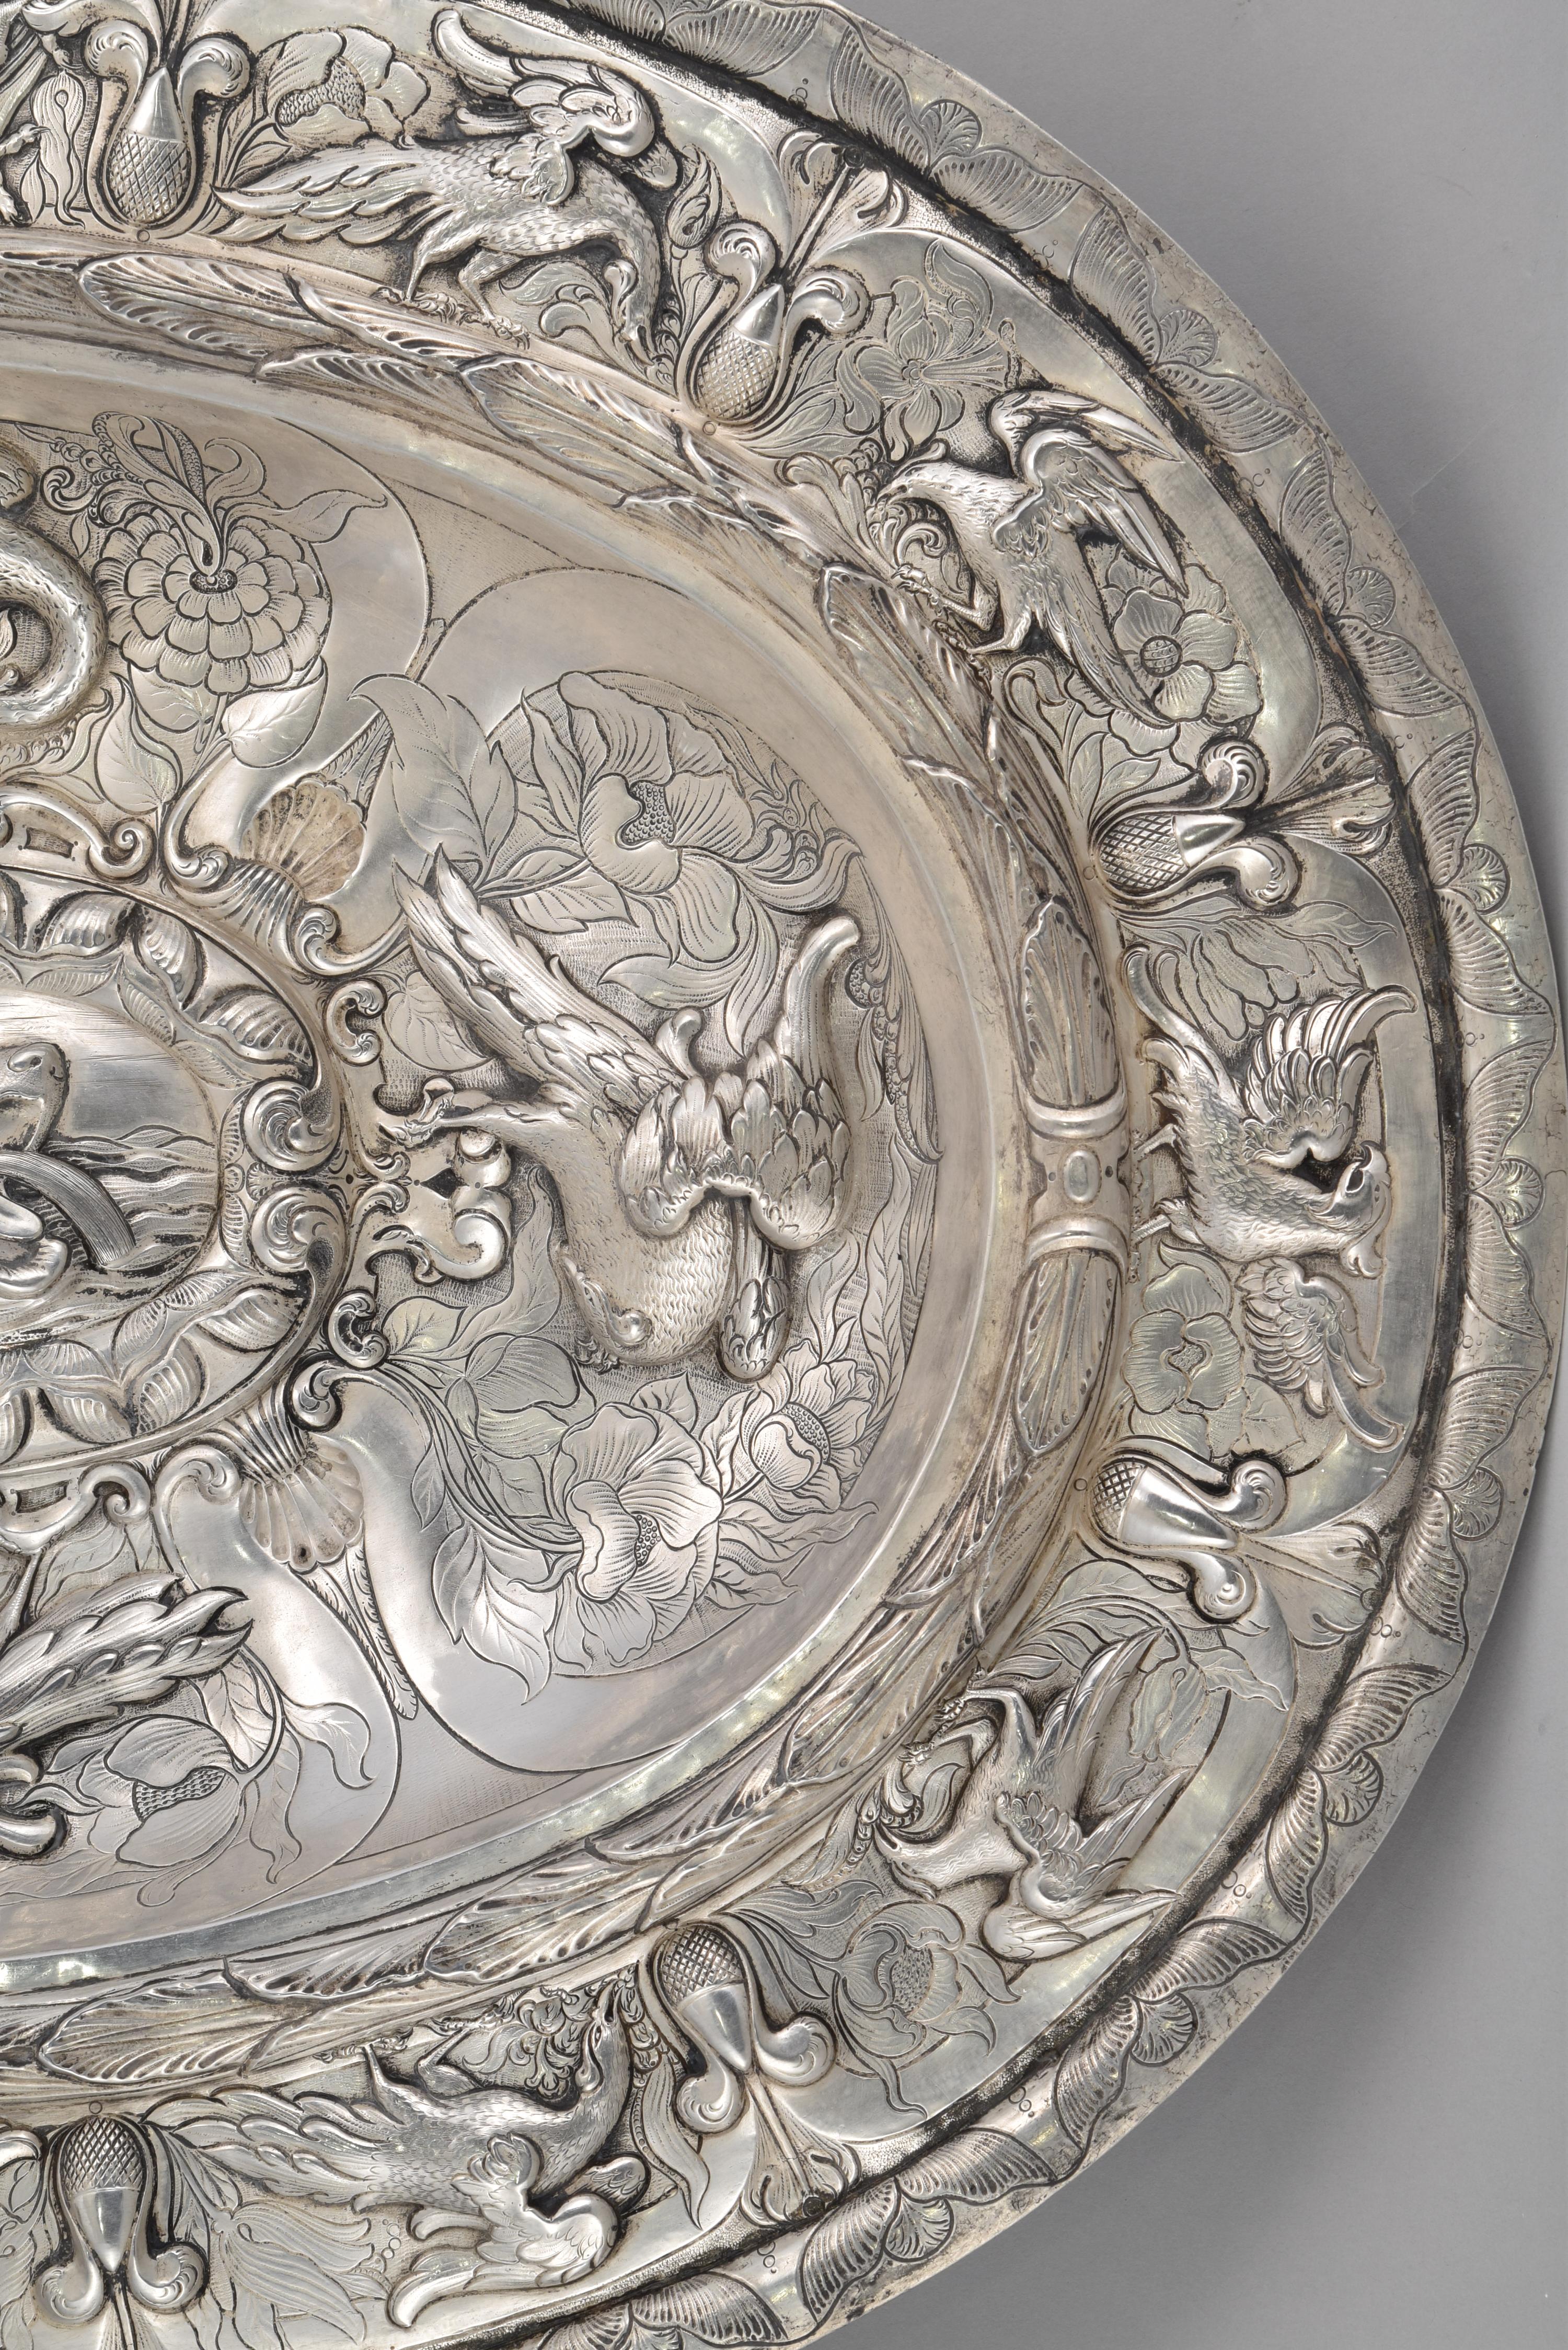 Solid Silver Oval Tray, Manuel Tene, Granada, Spain, 1755, with Hallmarks 4